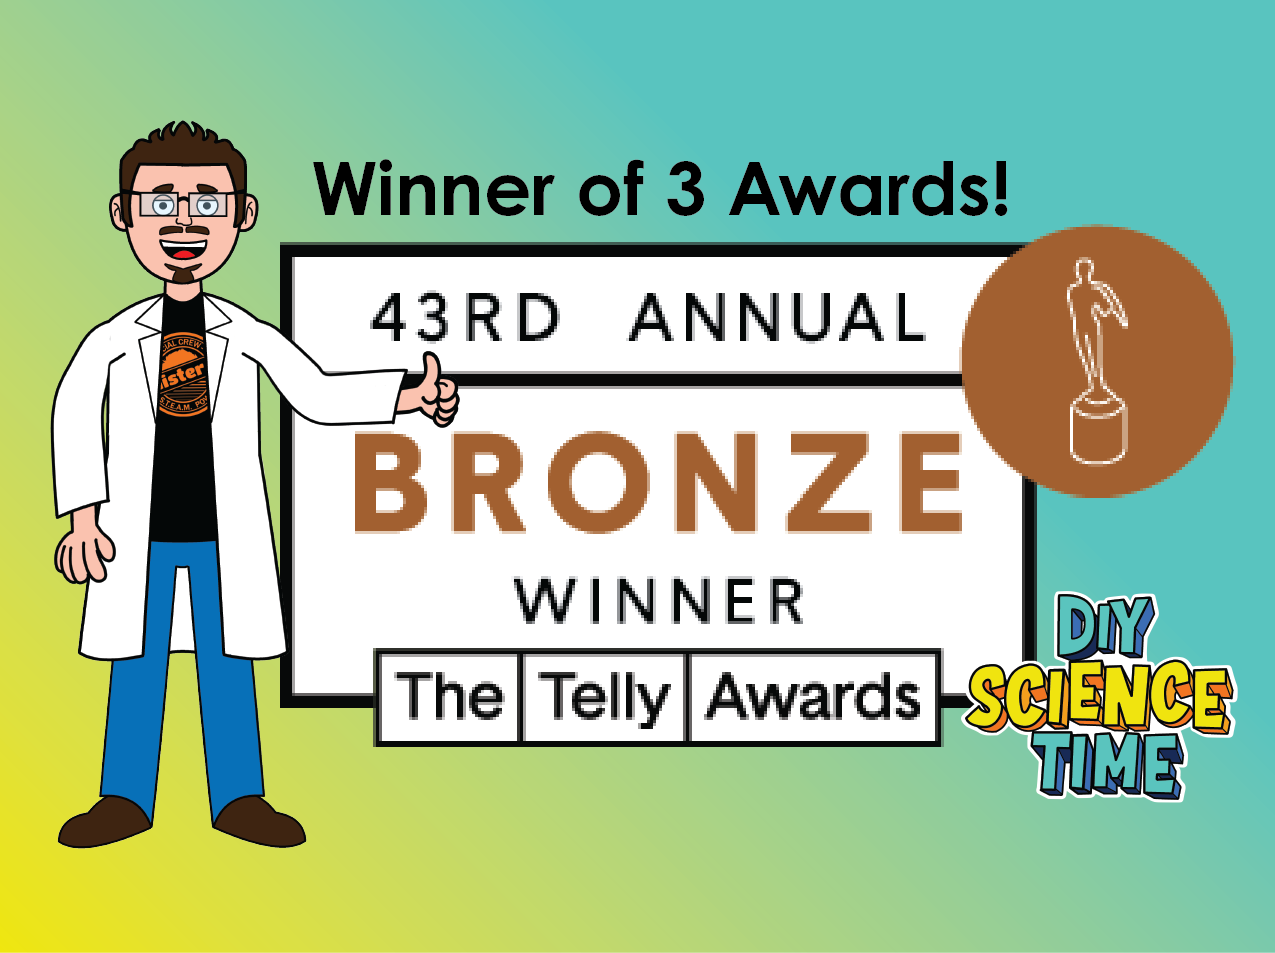 DIY Science Time 3 Time Bronze Telly Award Winner